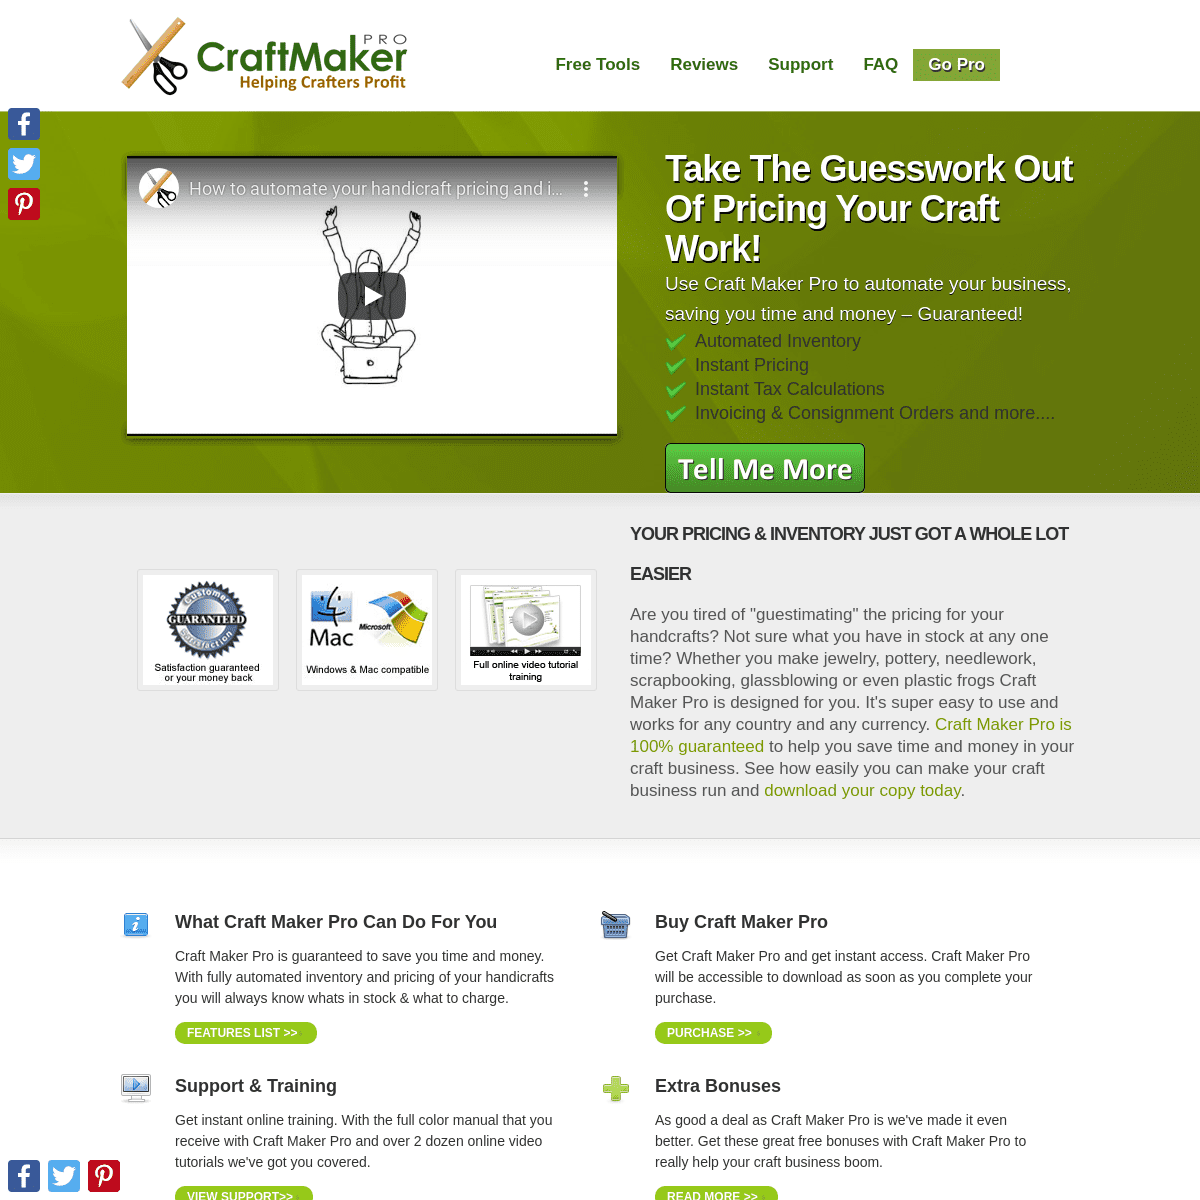 A complete backup of craftmakerpro.com